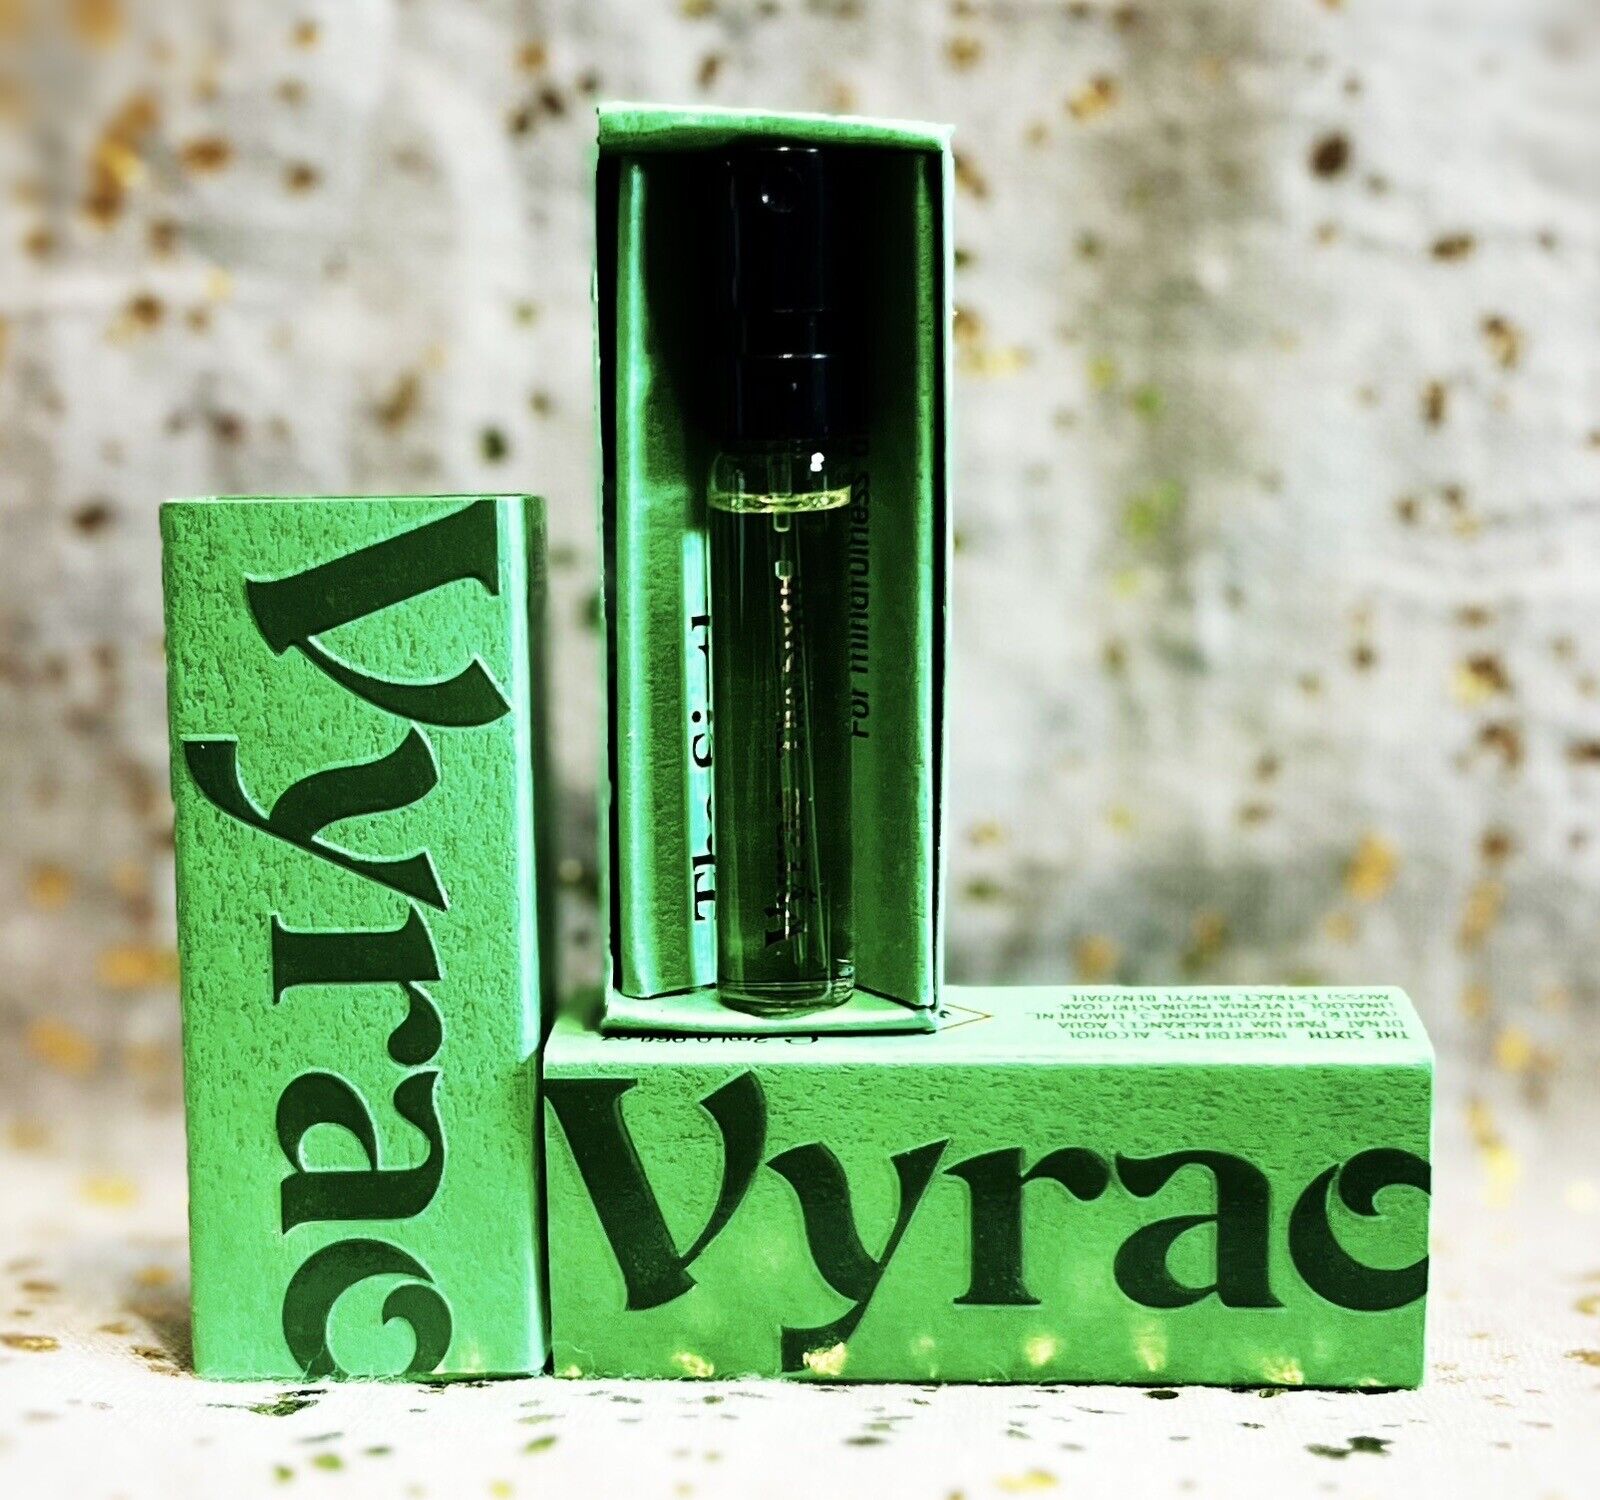 2x~Vyrao~THE SIXTH~Eau de Parfum~2ml/0.96 fl oz each~Trial Vials~NIB~Ships Free~